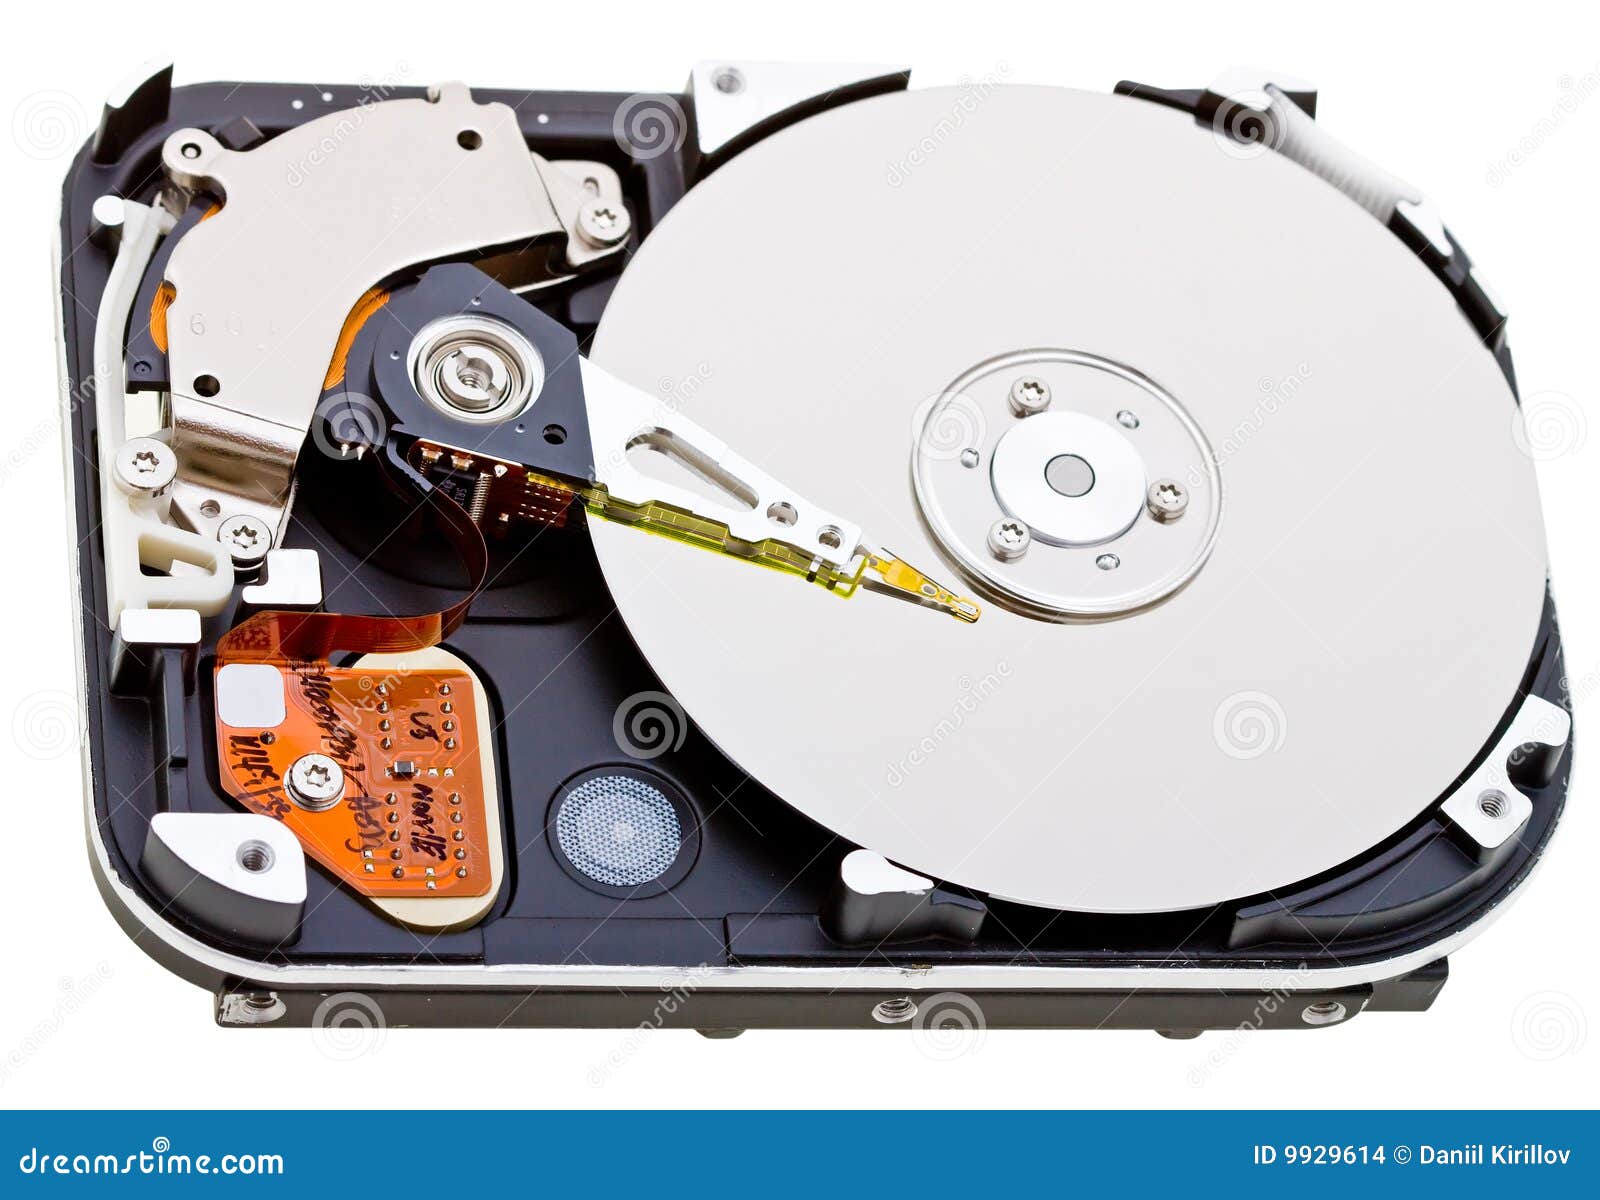 Inside of Hard Disk Isolated on White Stock Photo Image of macro, digital: 9929614